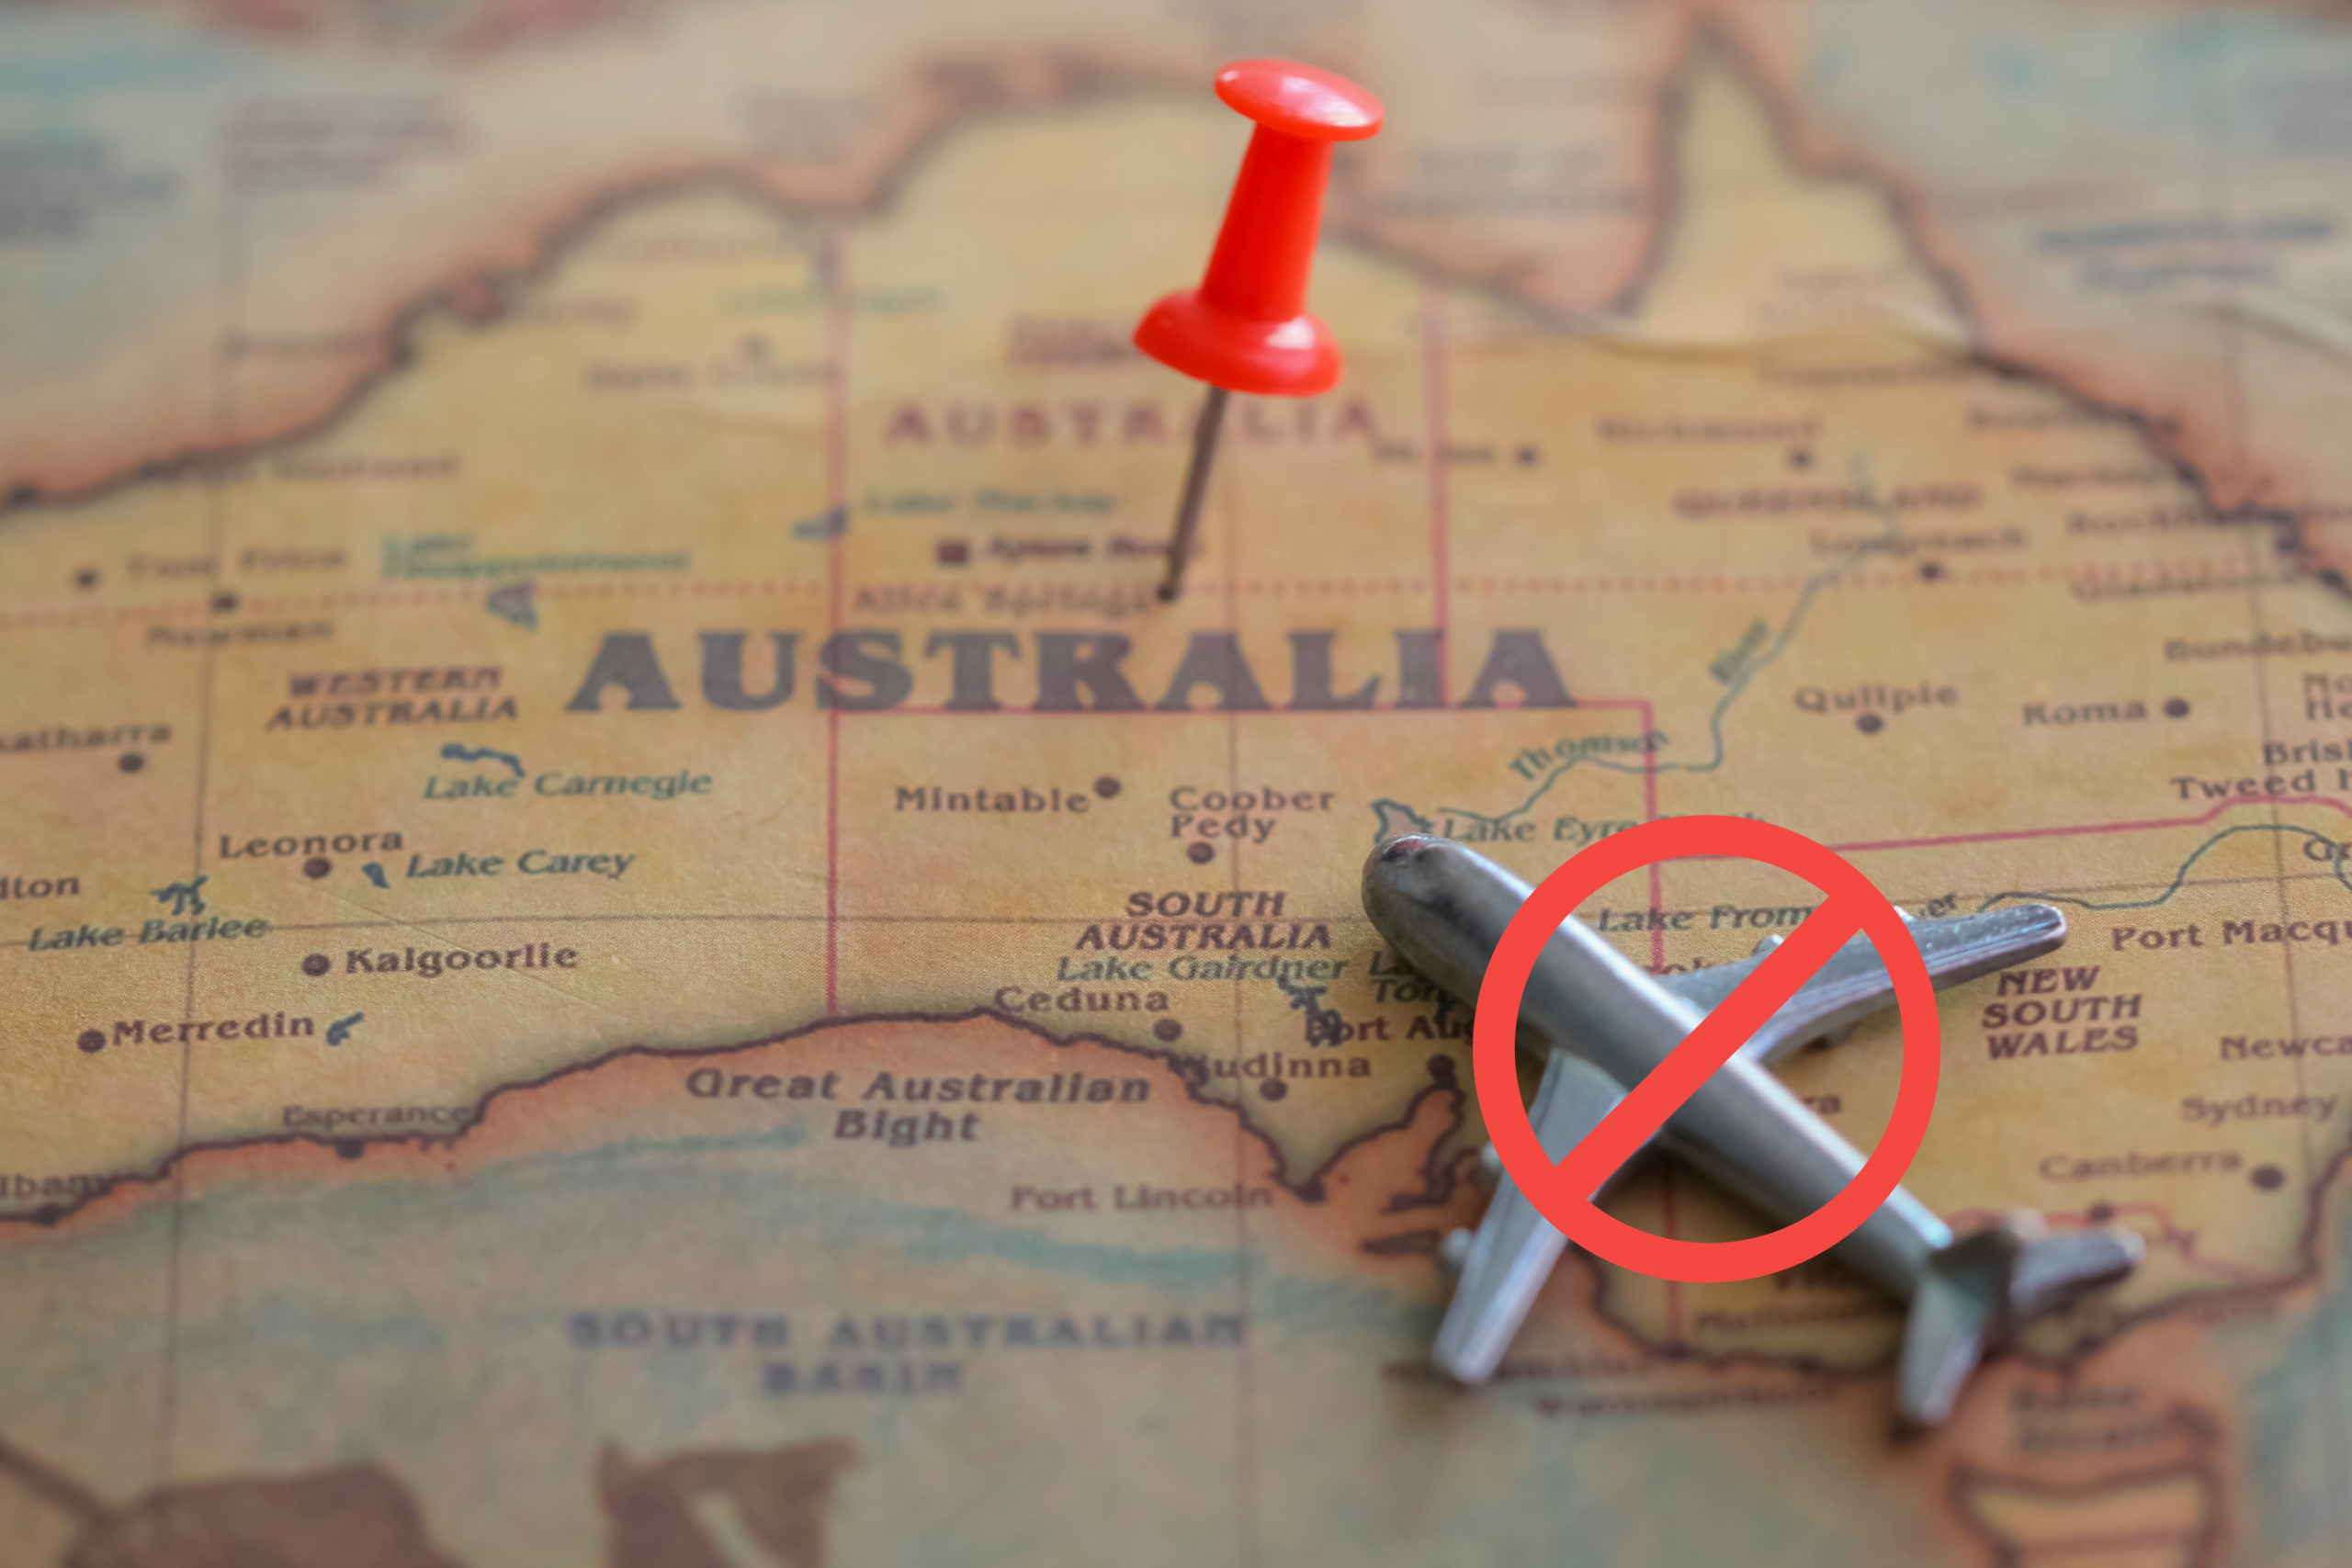 travel to australia restrictions